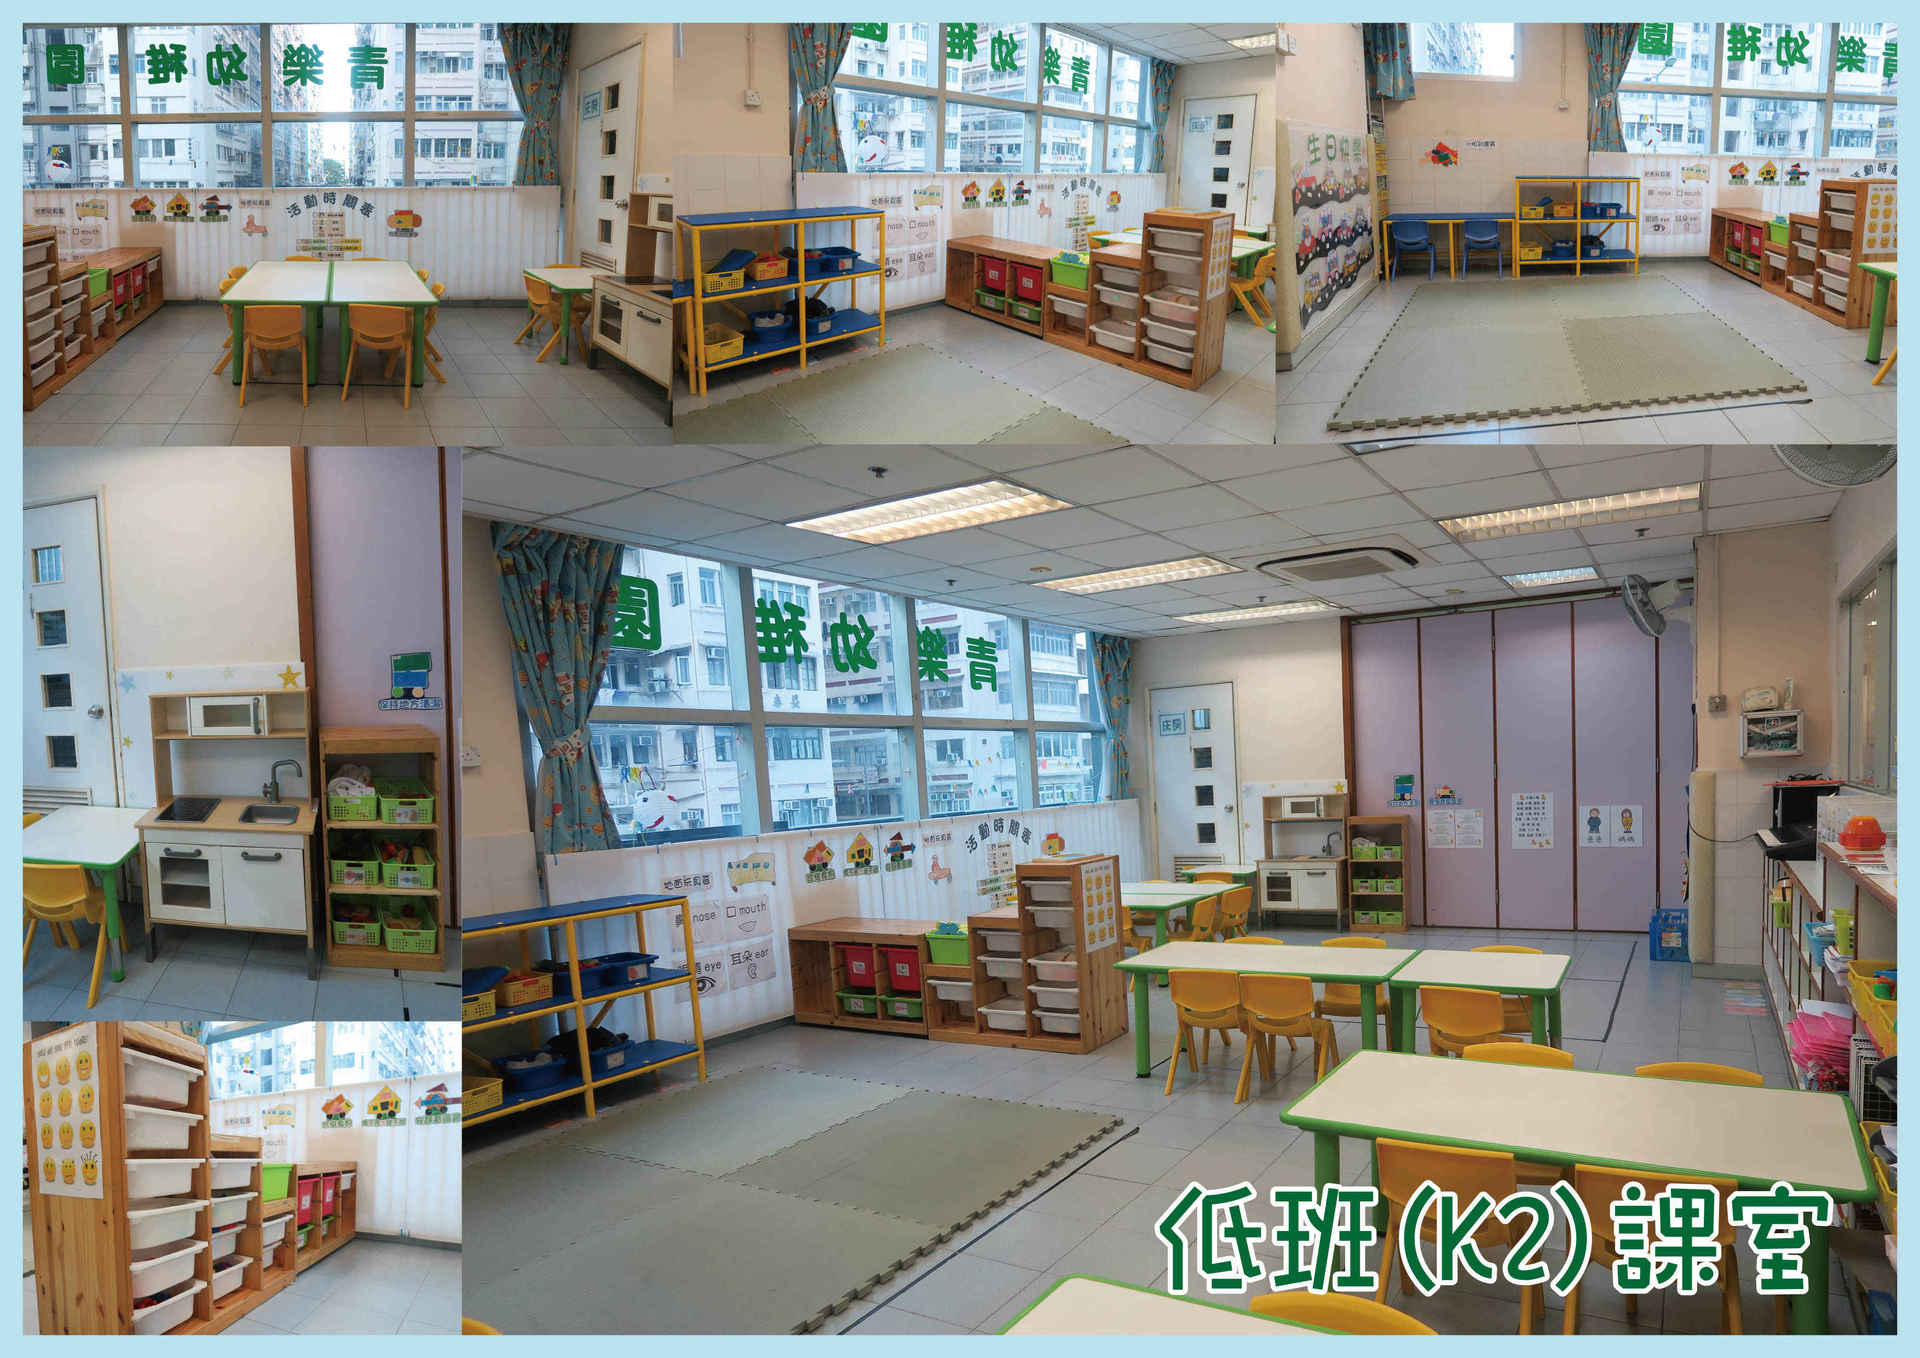 K2 Classroom